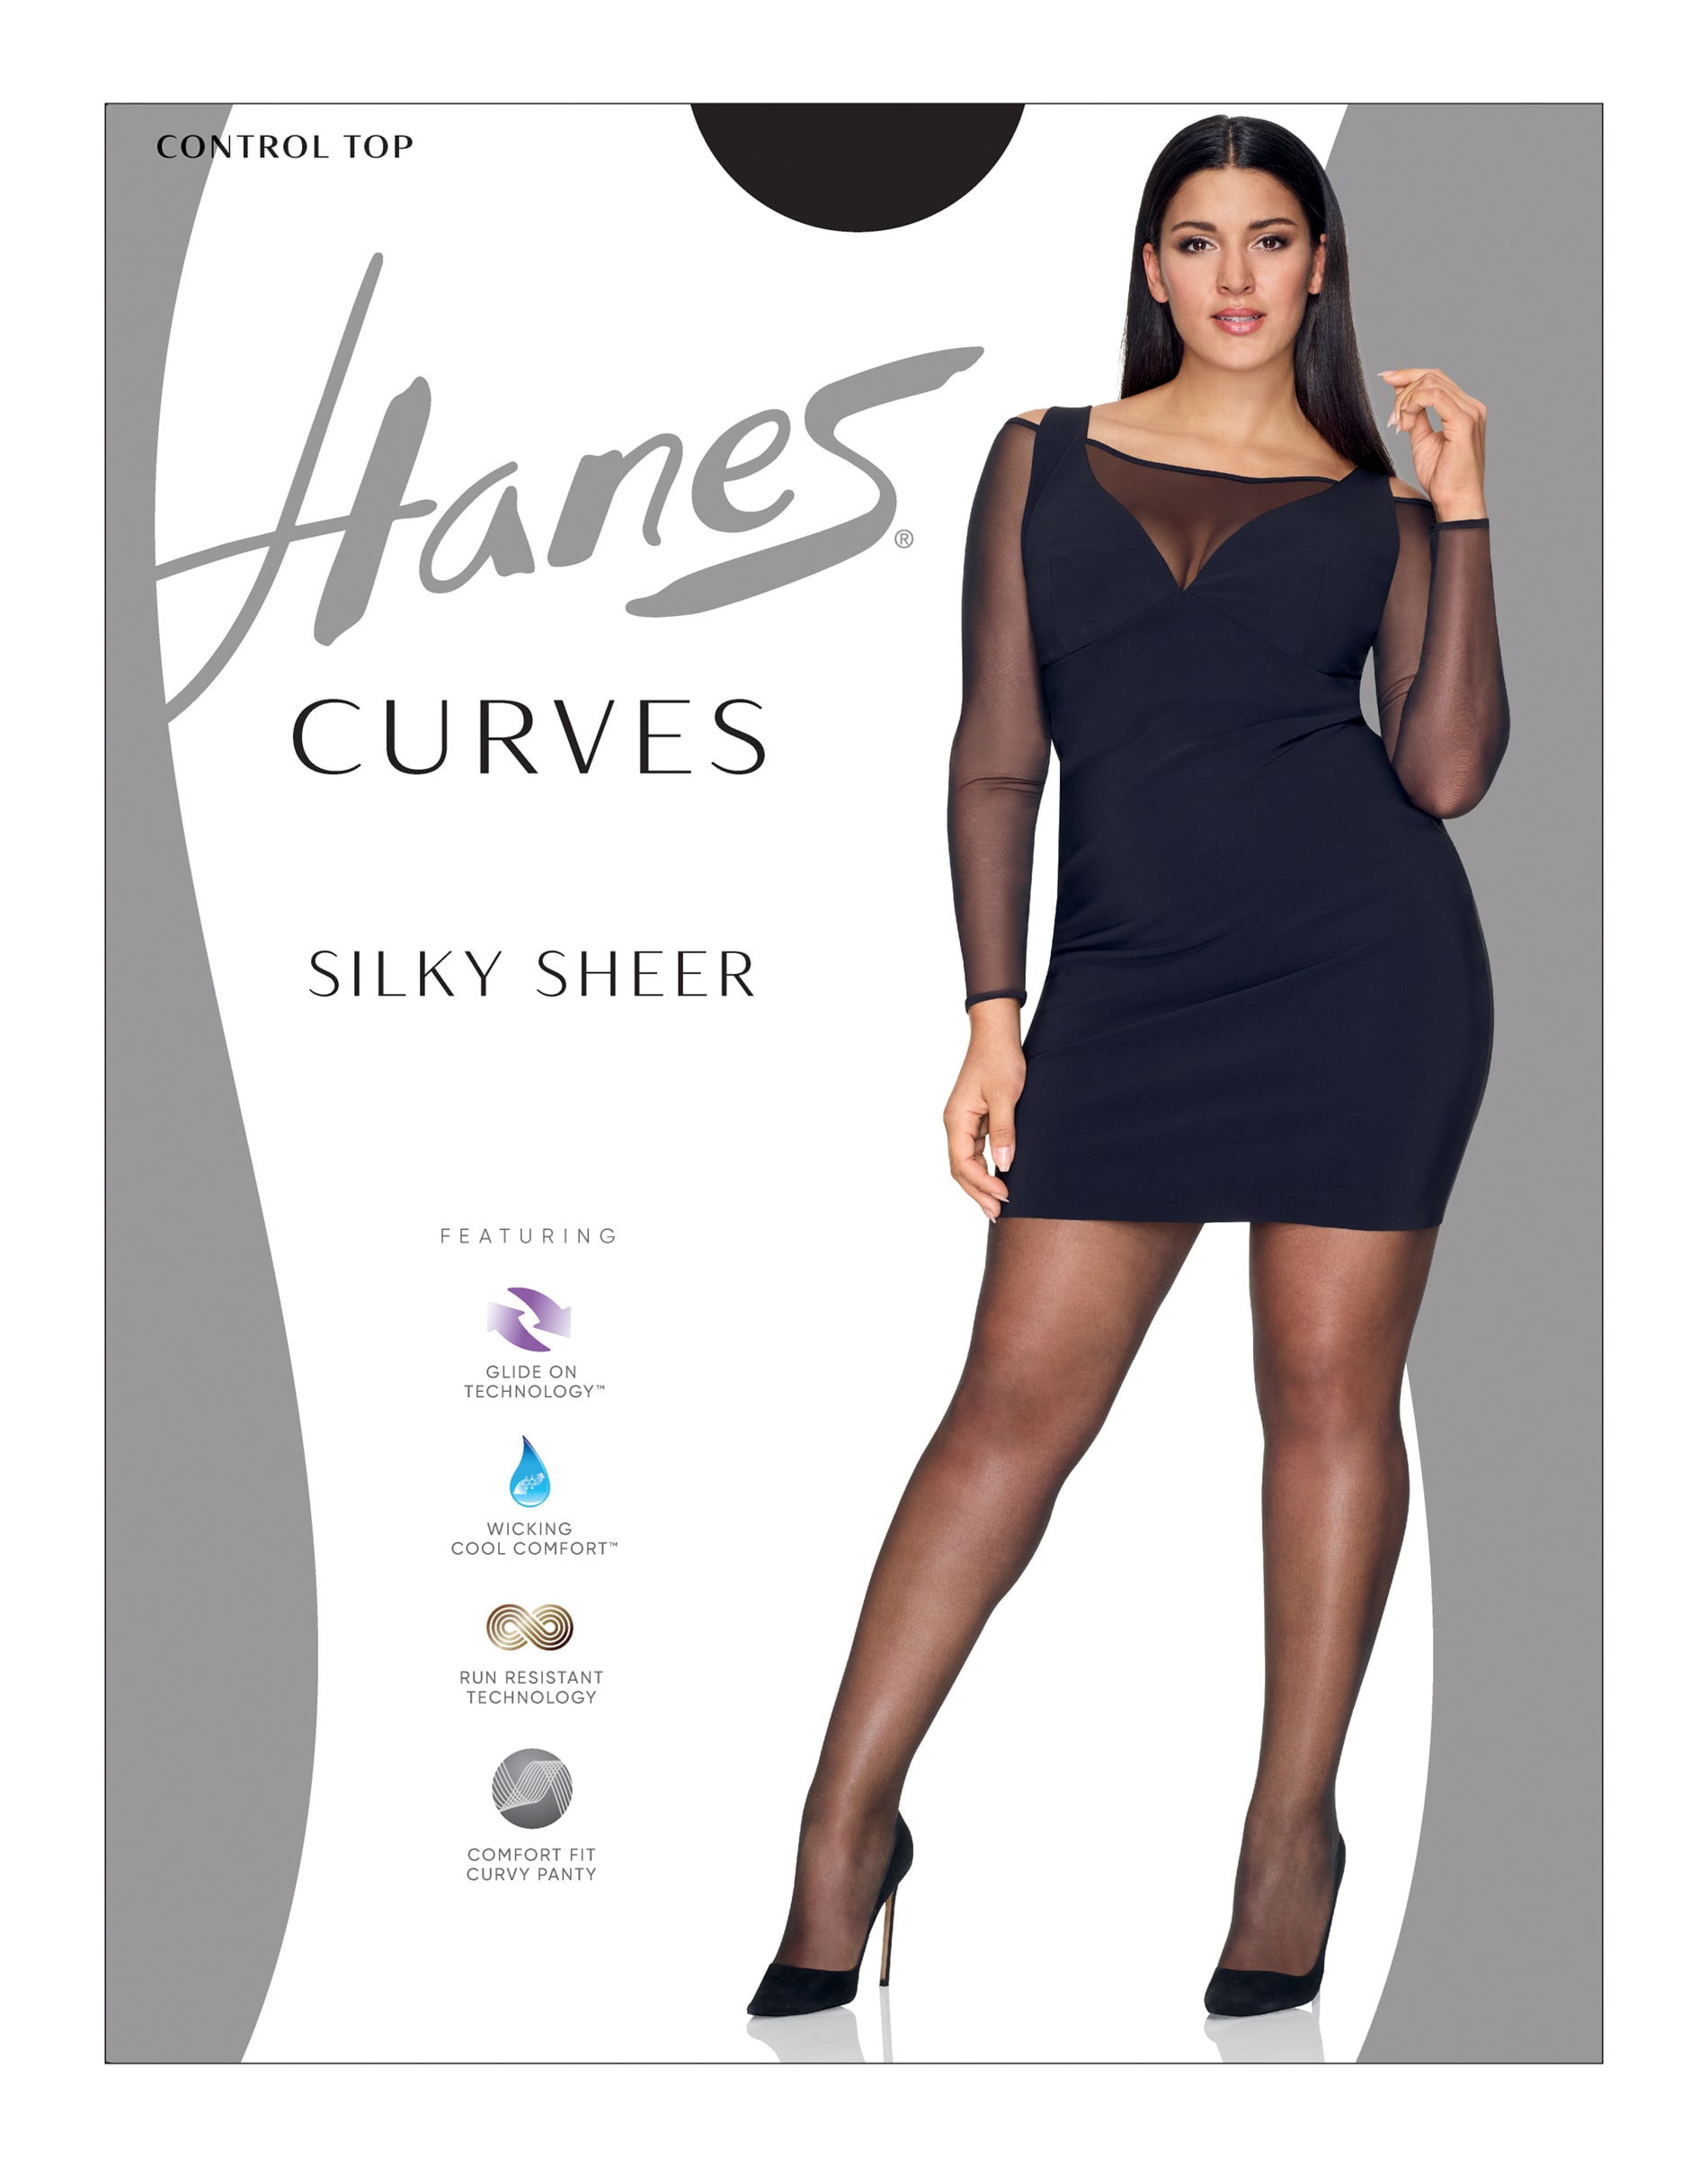 Hanes Curves Silky Sheer Control Top Legwear Nude 1X/2X Women's